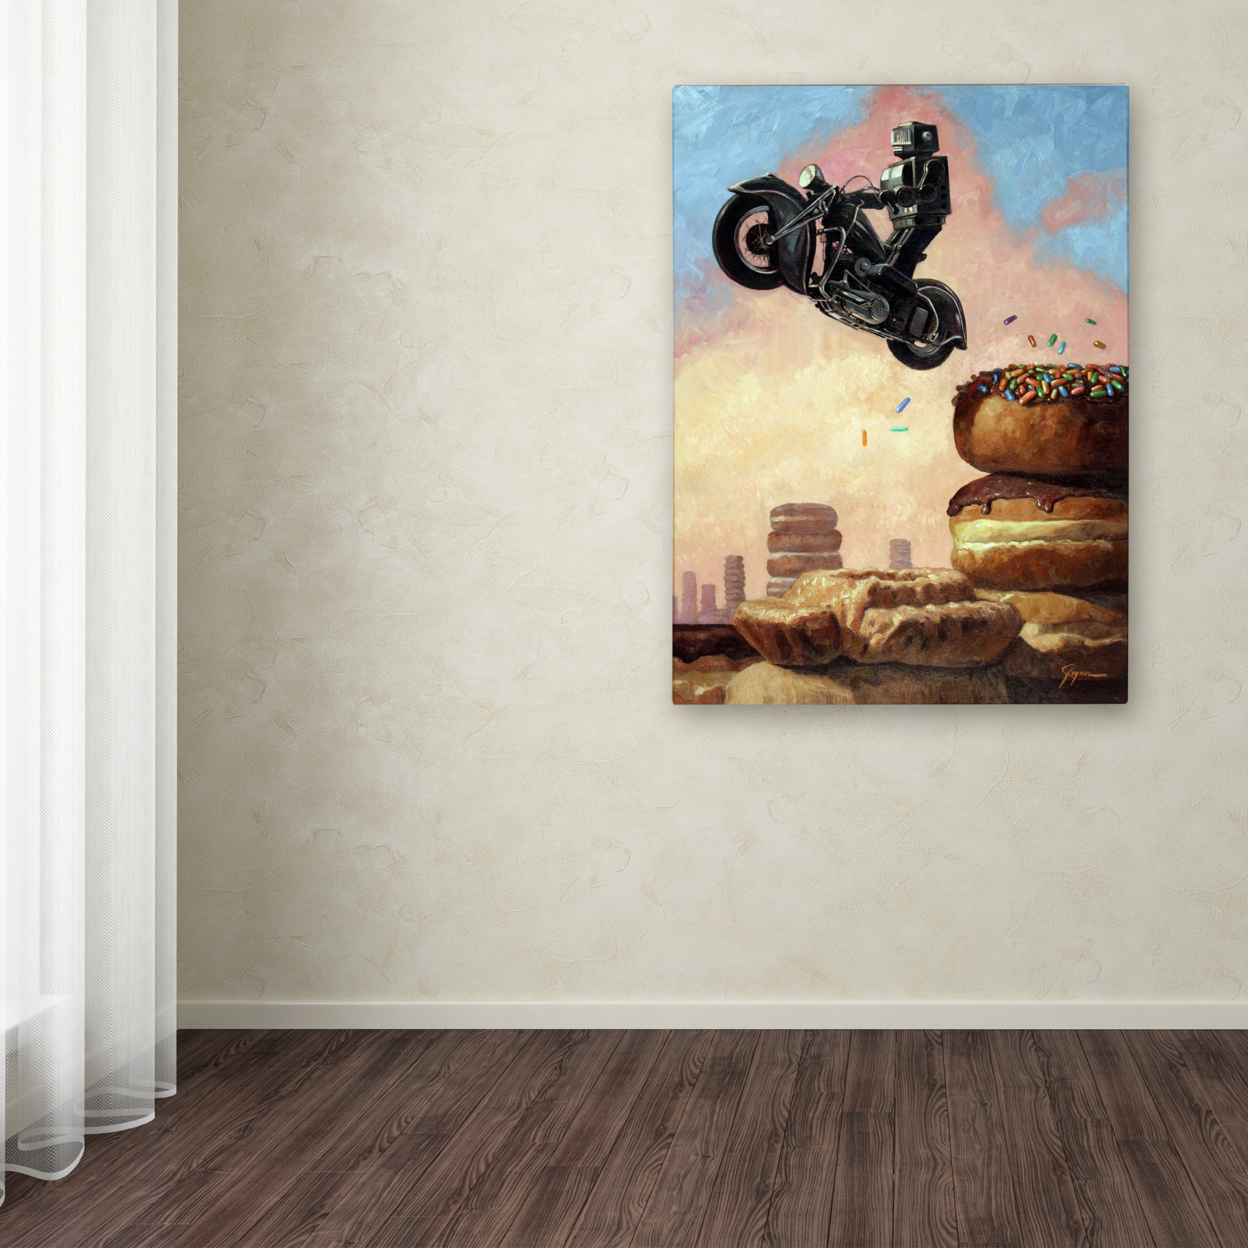 Eric Joyner 'Dark Rider Again' Canvas Wall Art 35 X 47 Inches